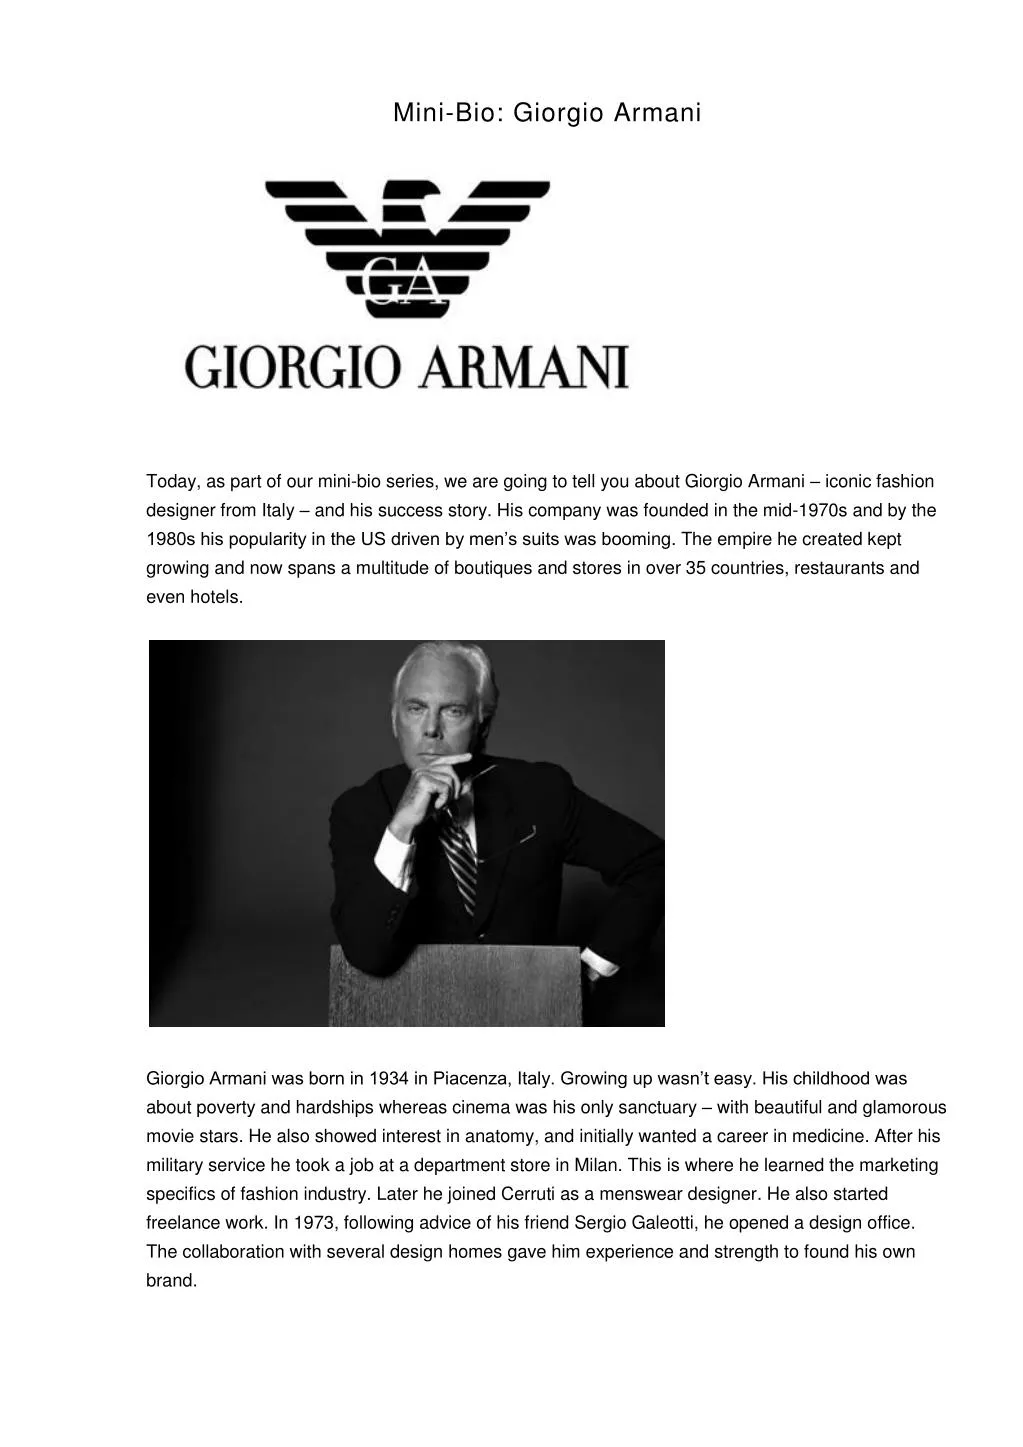 biography of giorgio armani